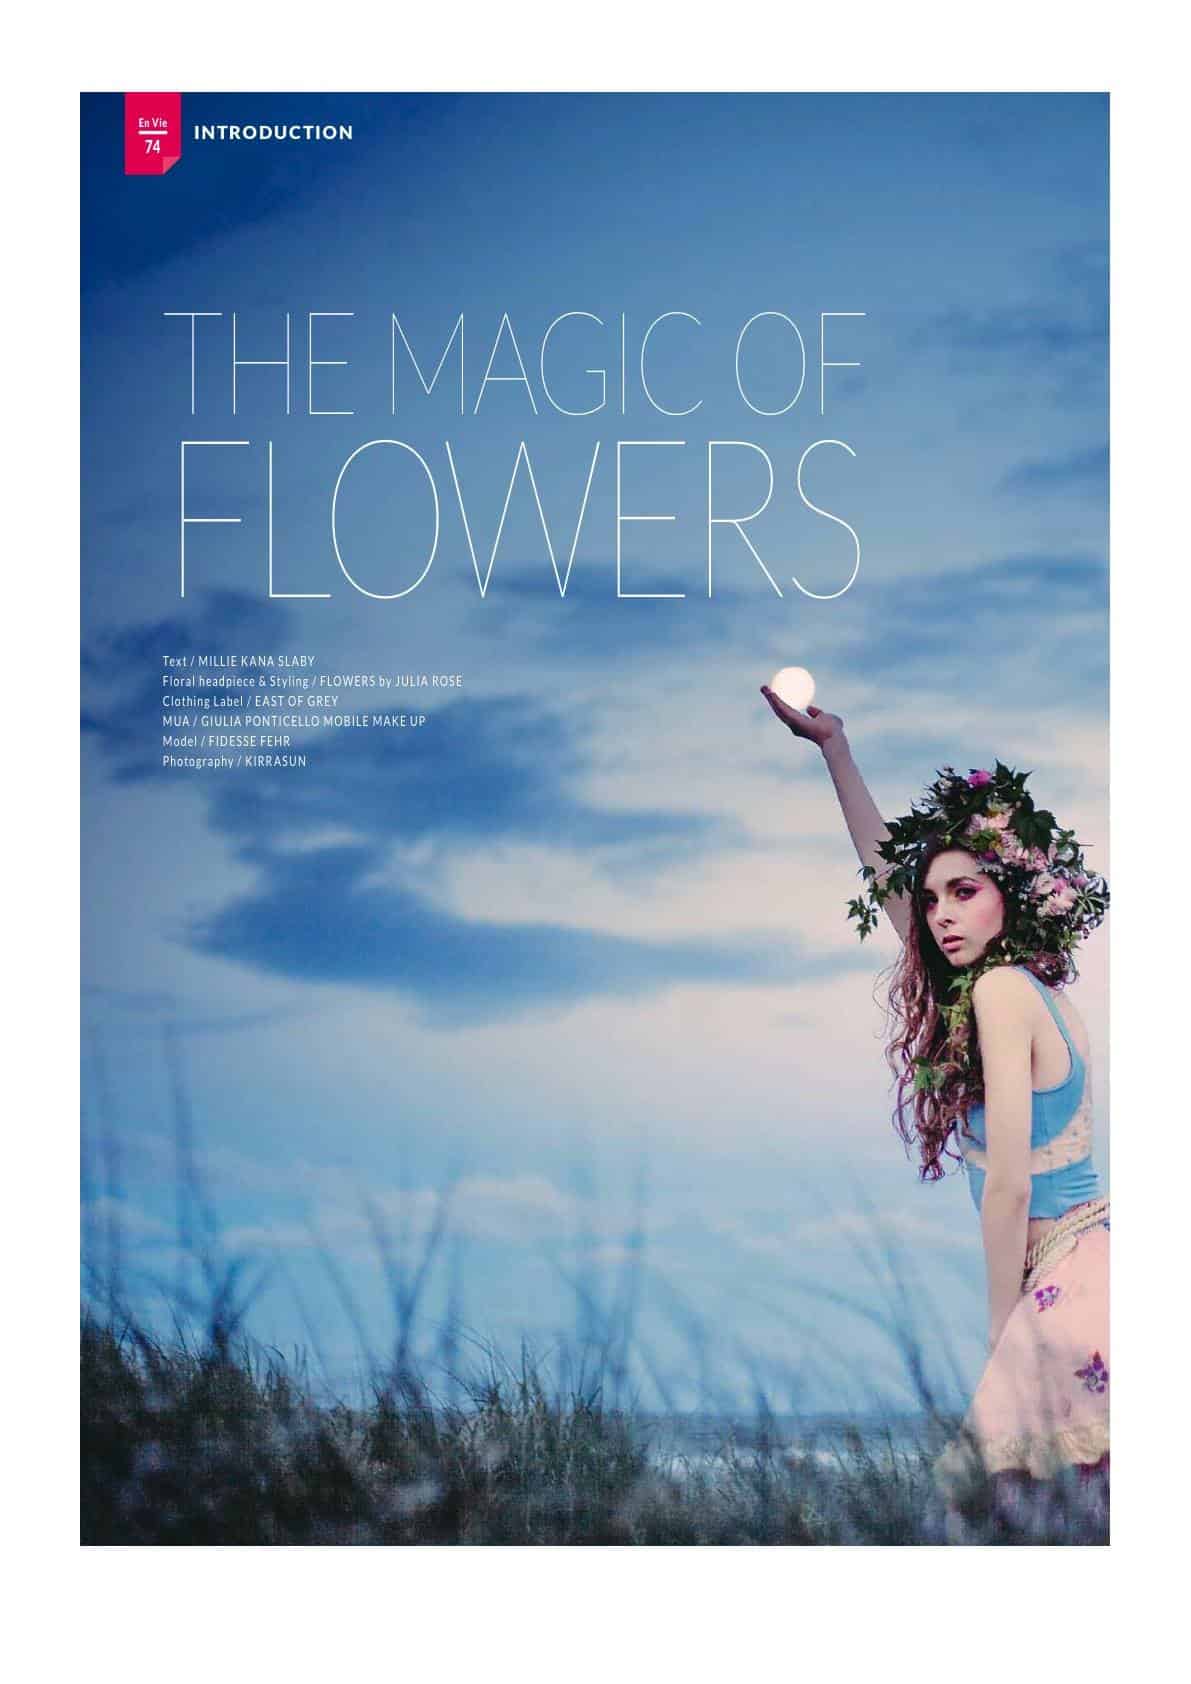 Envie Magazine - Artisti feature - Flowers by Julia rose